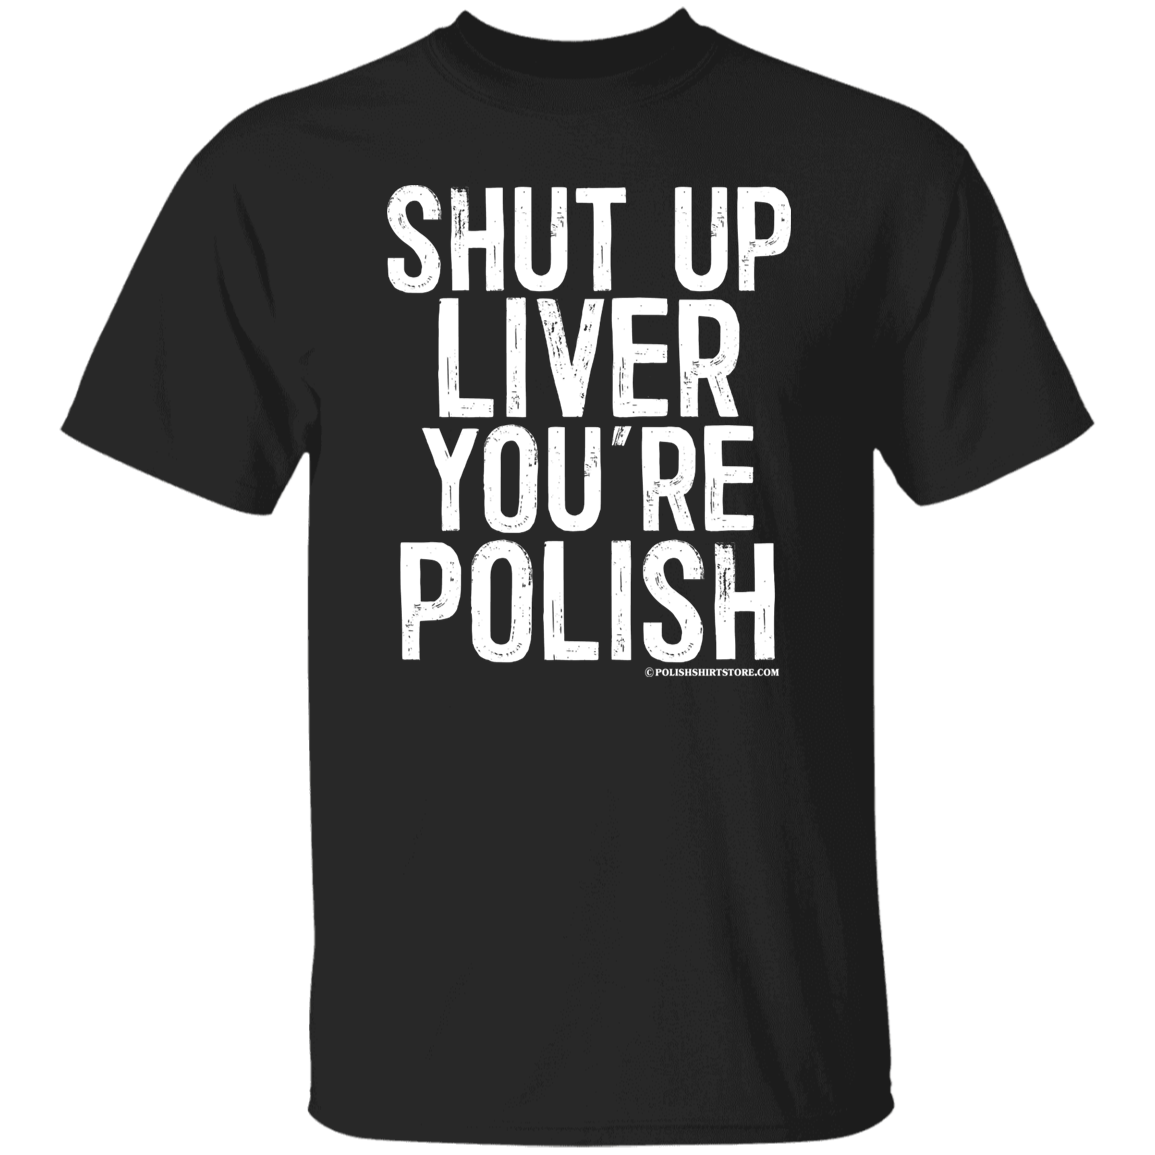 Shut Up Liver You're Polish Apparel CustomCat G500 5.3 oz. T-Shirt Black S